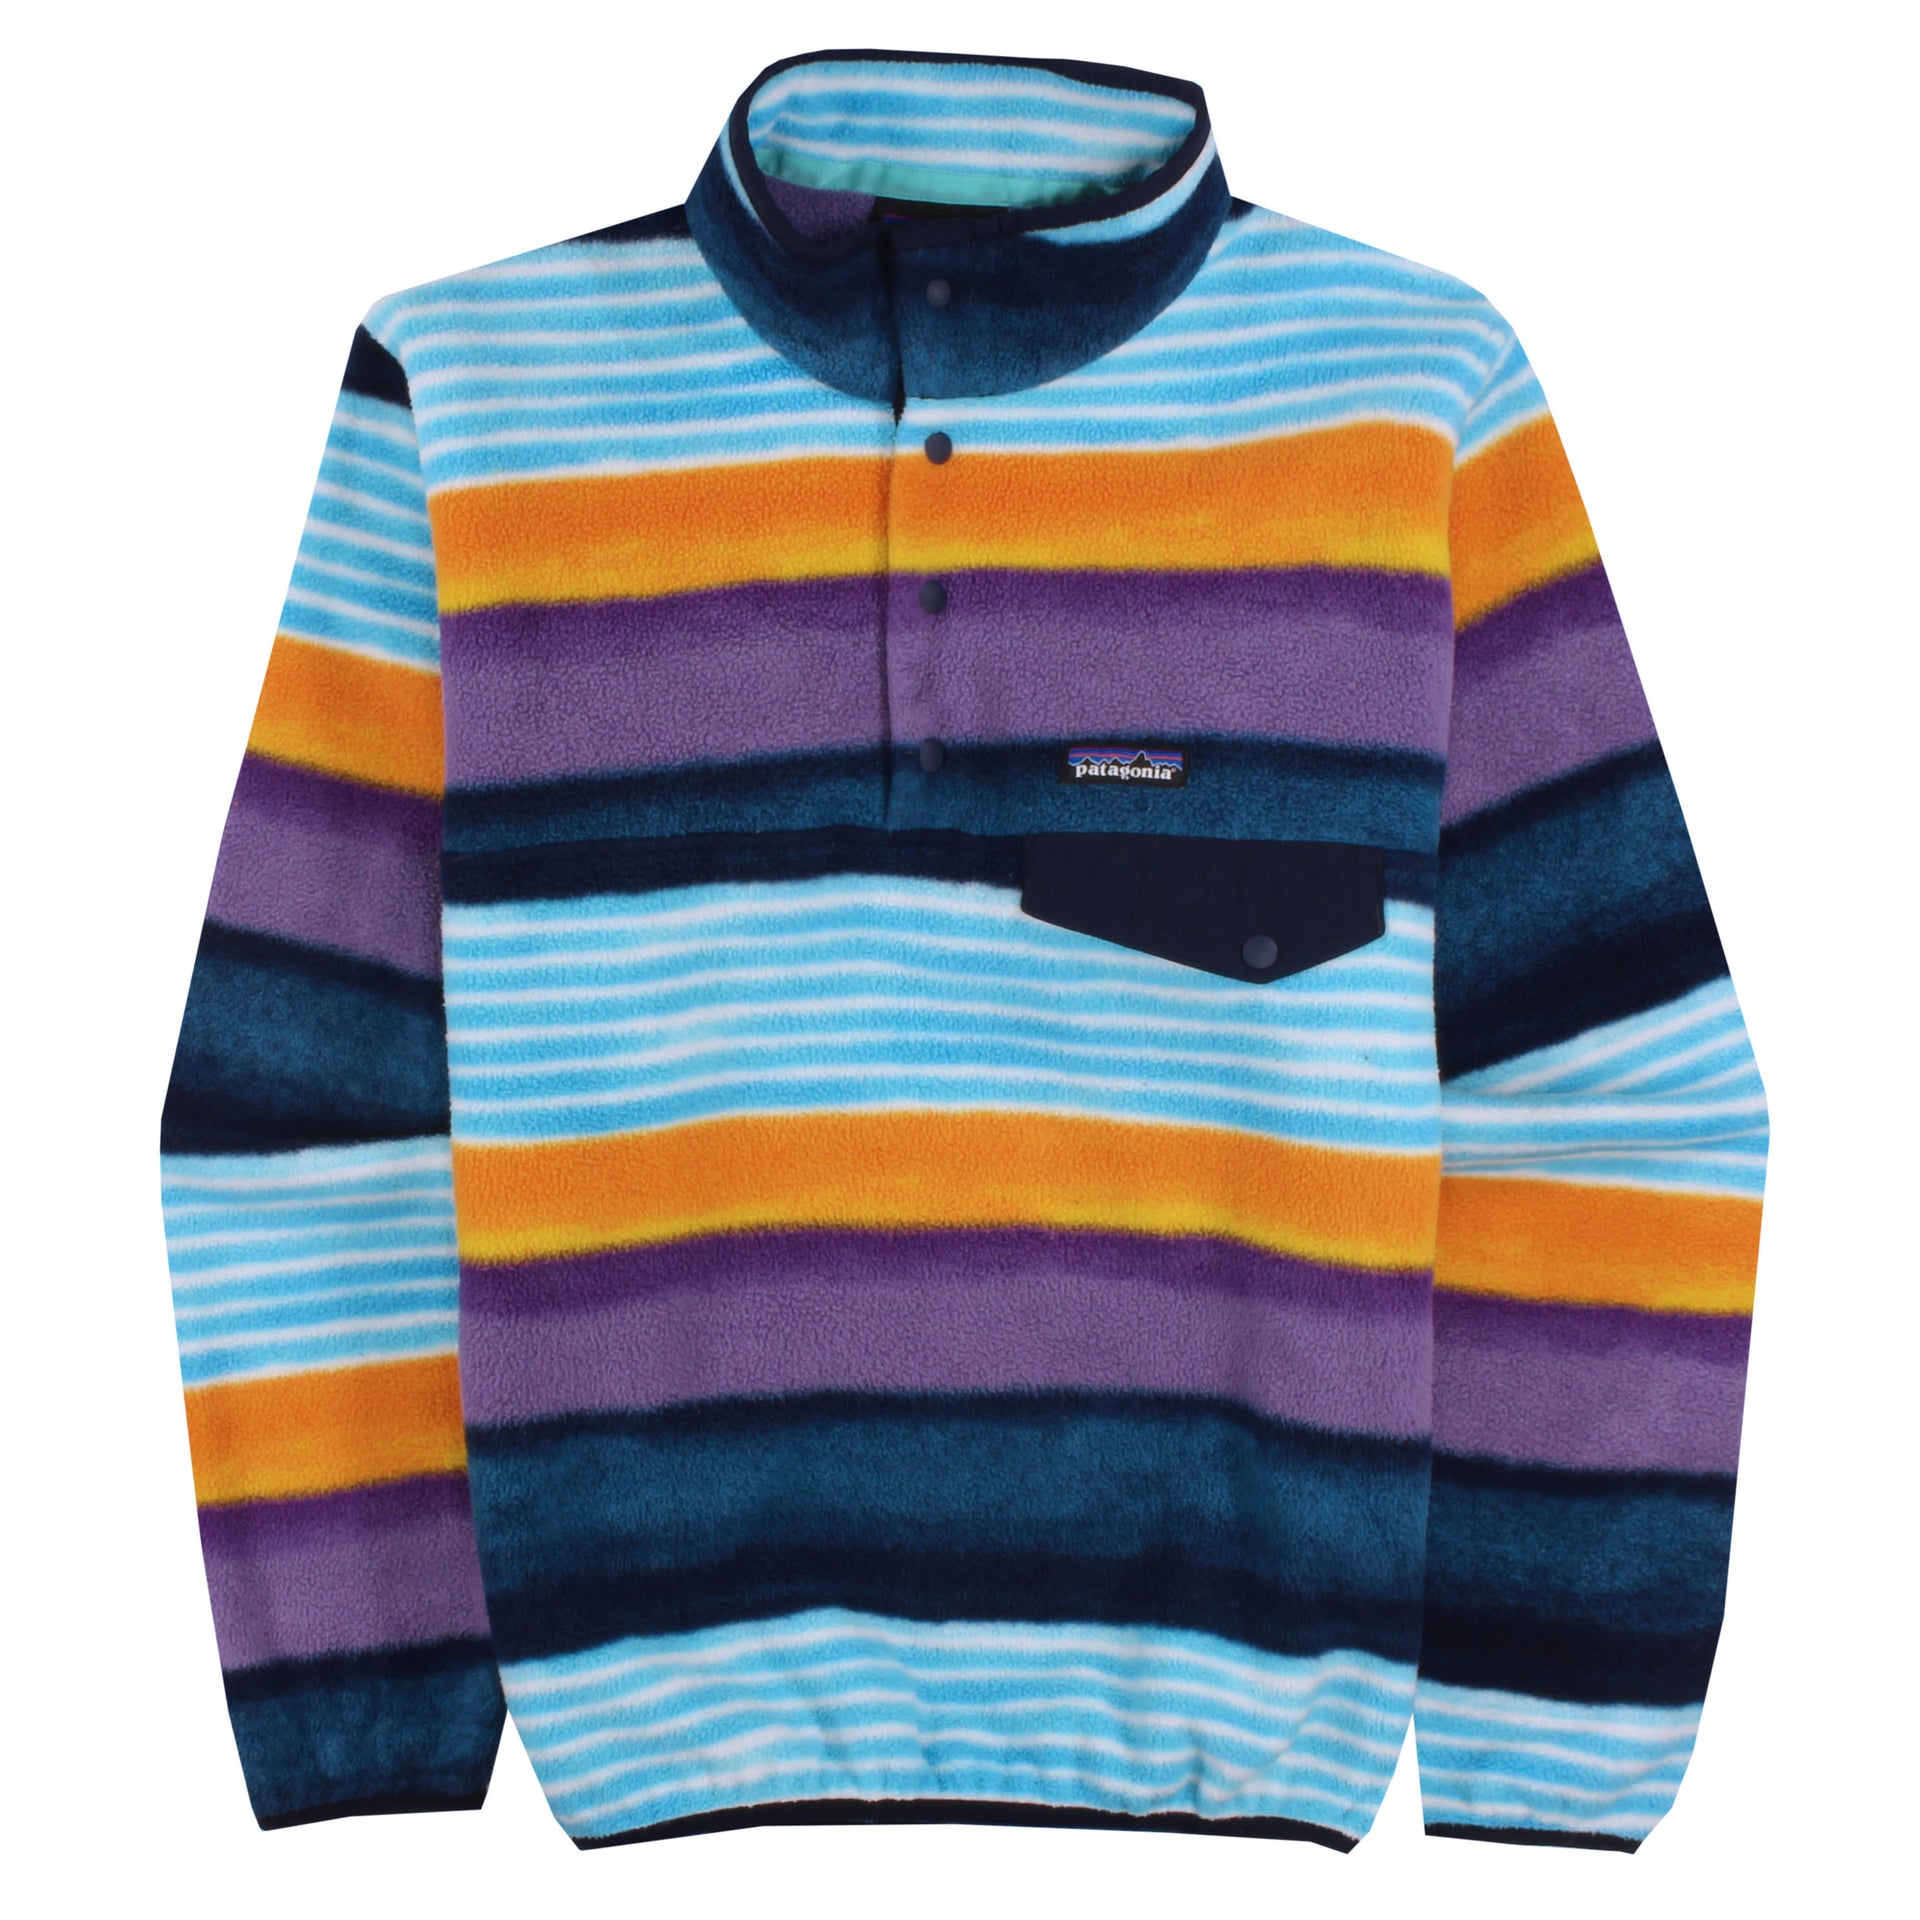 Patagonia Men's Synchilla® Snap-T® Fleece Pullover